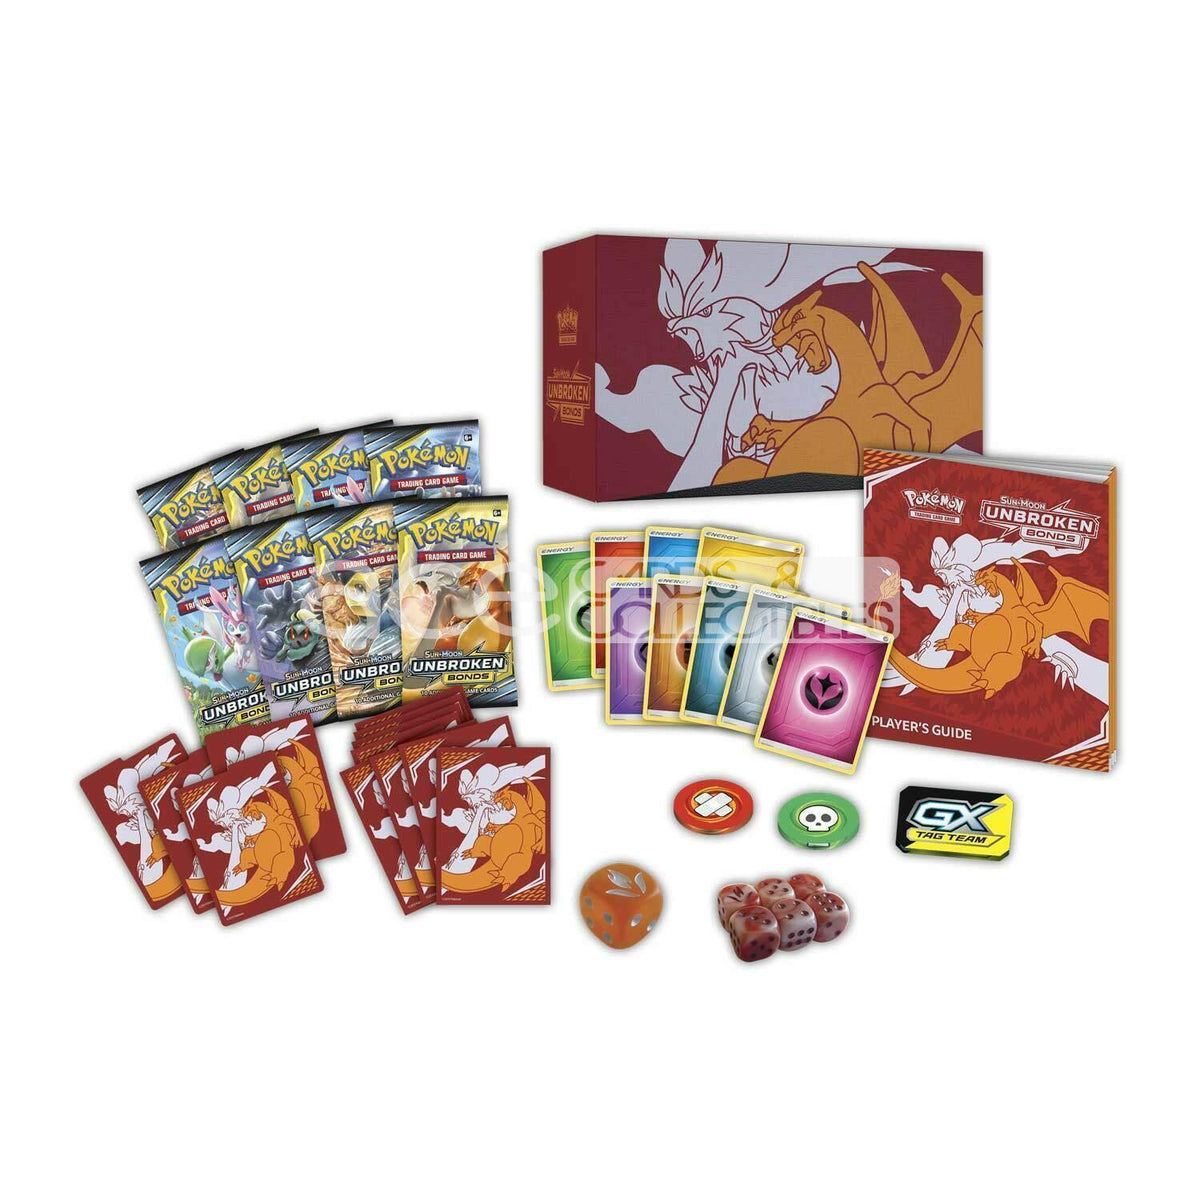 Pokemon TCG: Sun &amp; Moon SM10 Unbroken Bonds Elite Trainer Box-The Pokémon Company International-Ace Cards &amp; Collectibles